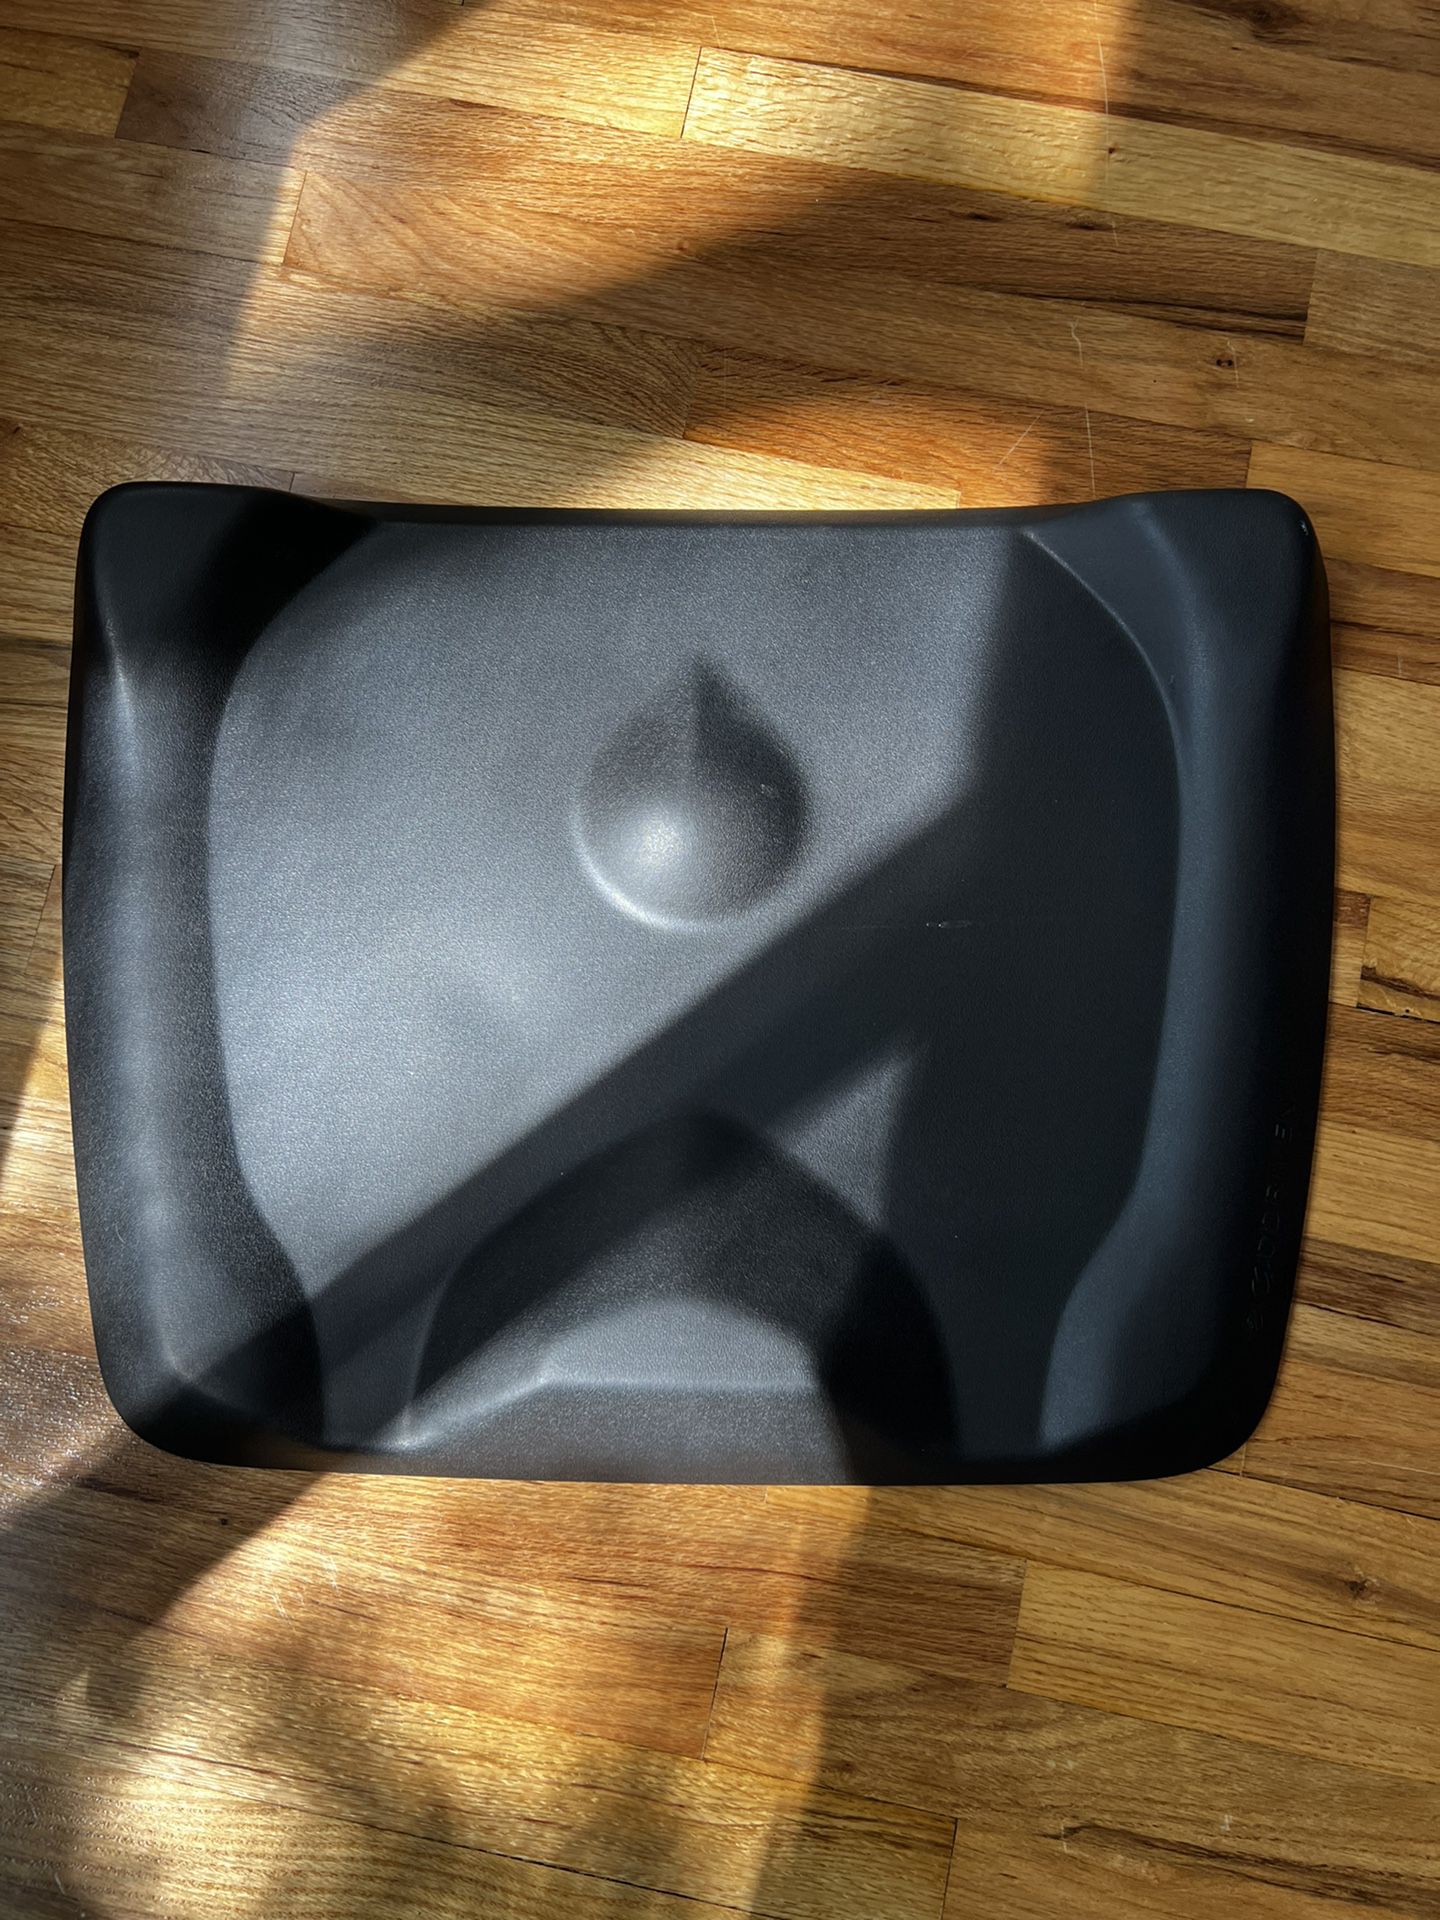 Overstock The Not-Flat Standing Desk Anti-Fatigue Massage Mat with Calculated Terrain - Black